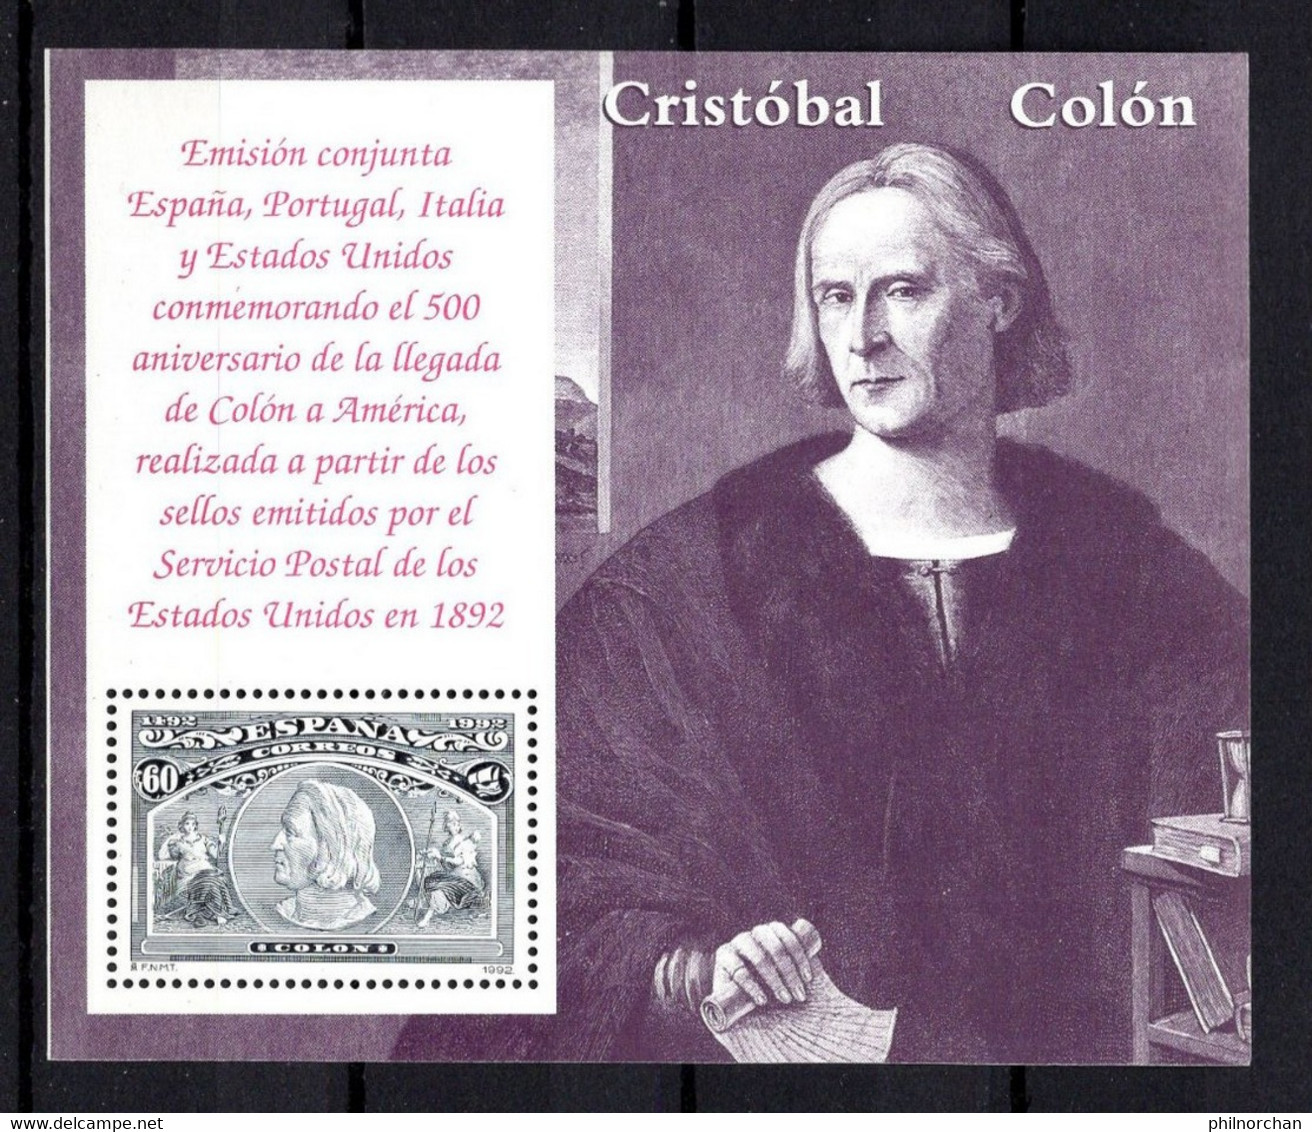 Espagne 1992 Blocs Neufs** N°49,51,52,53,54,55,56, Bloc du timbre 2818  TB  3 €  (cote 16,65 €)